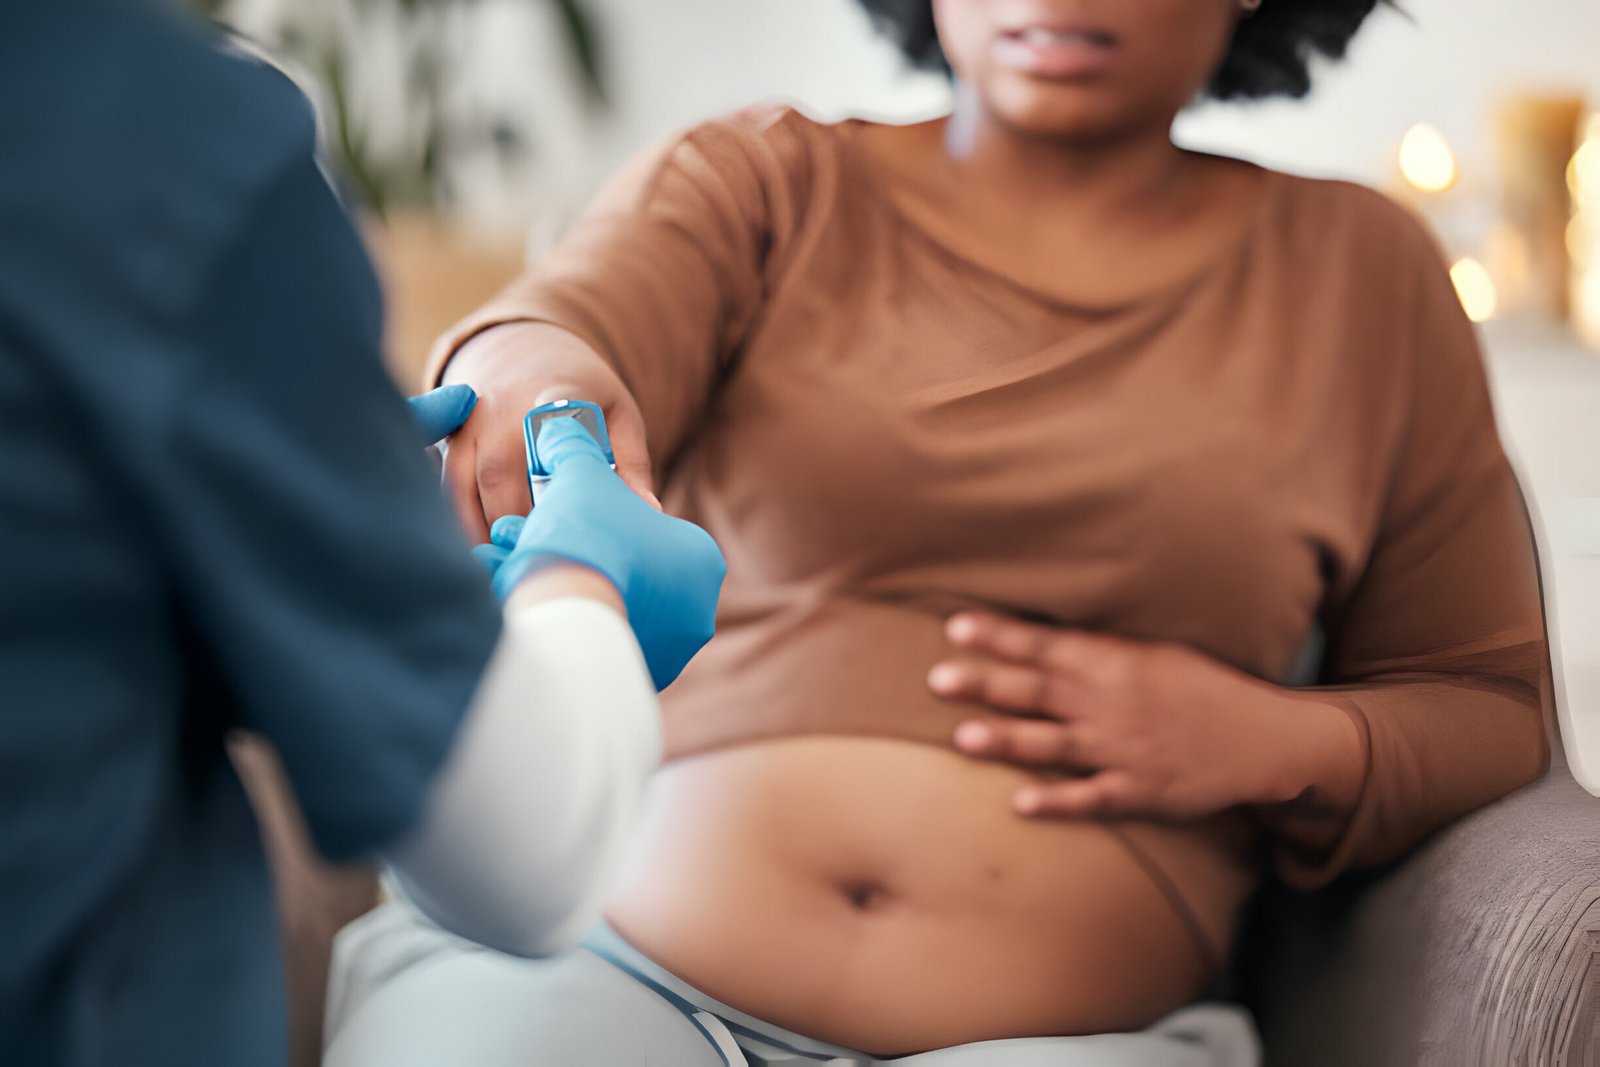 Unhealthy Weight Gain in Pregnancy